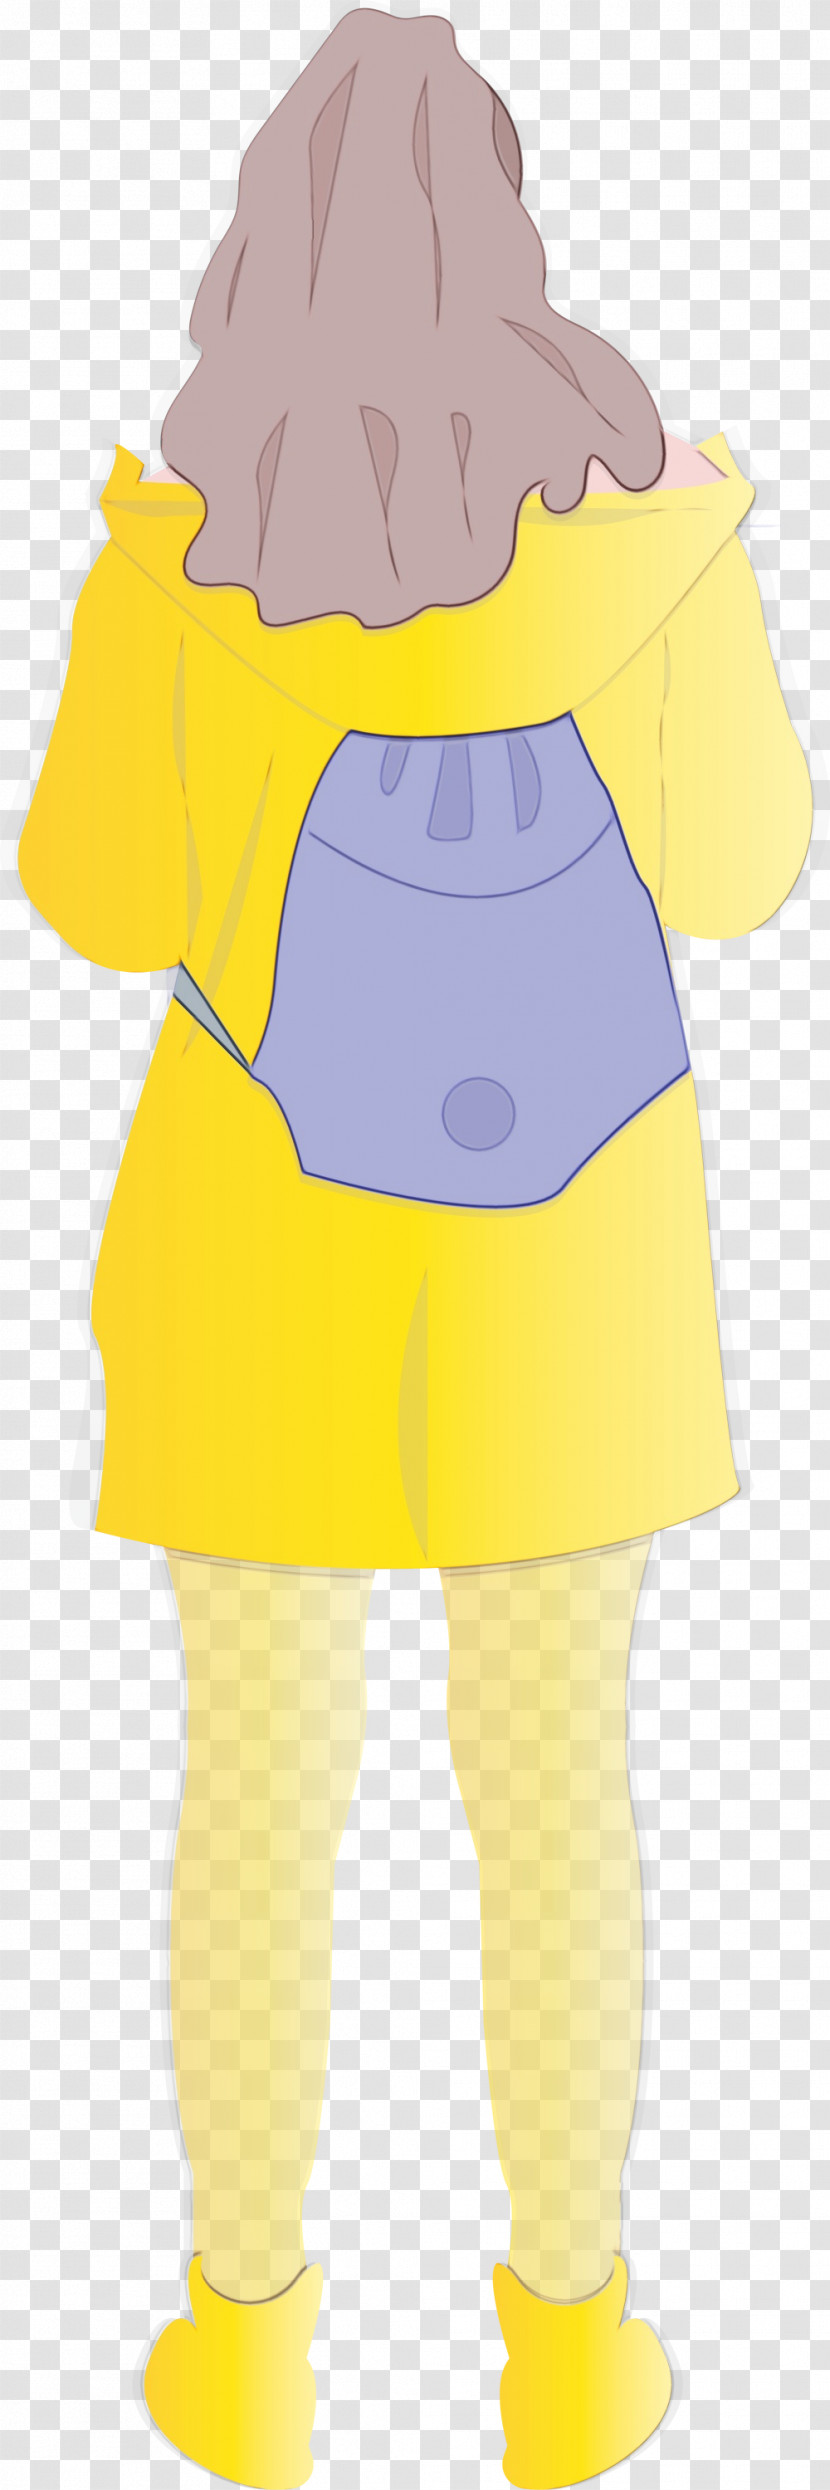 Yellow Clothing Cartoon Standing Dress Transparent PNG